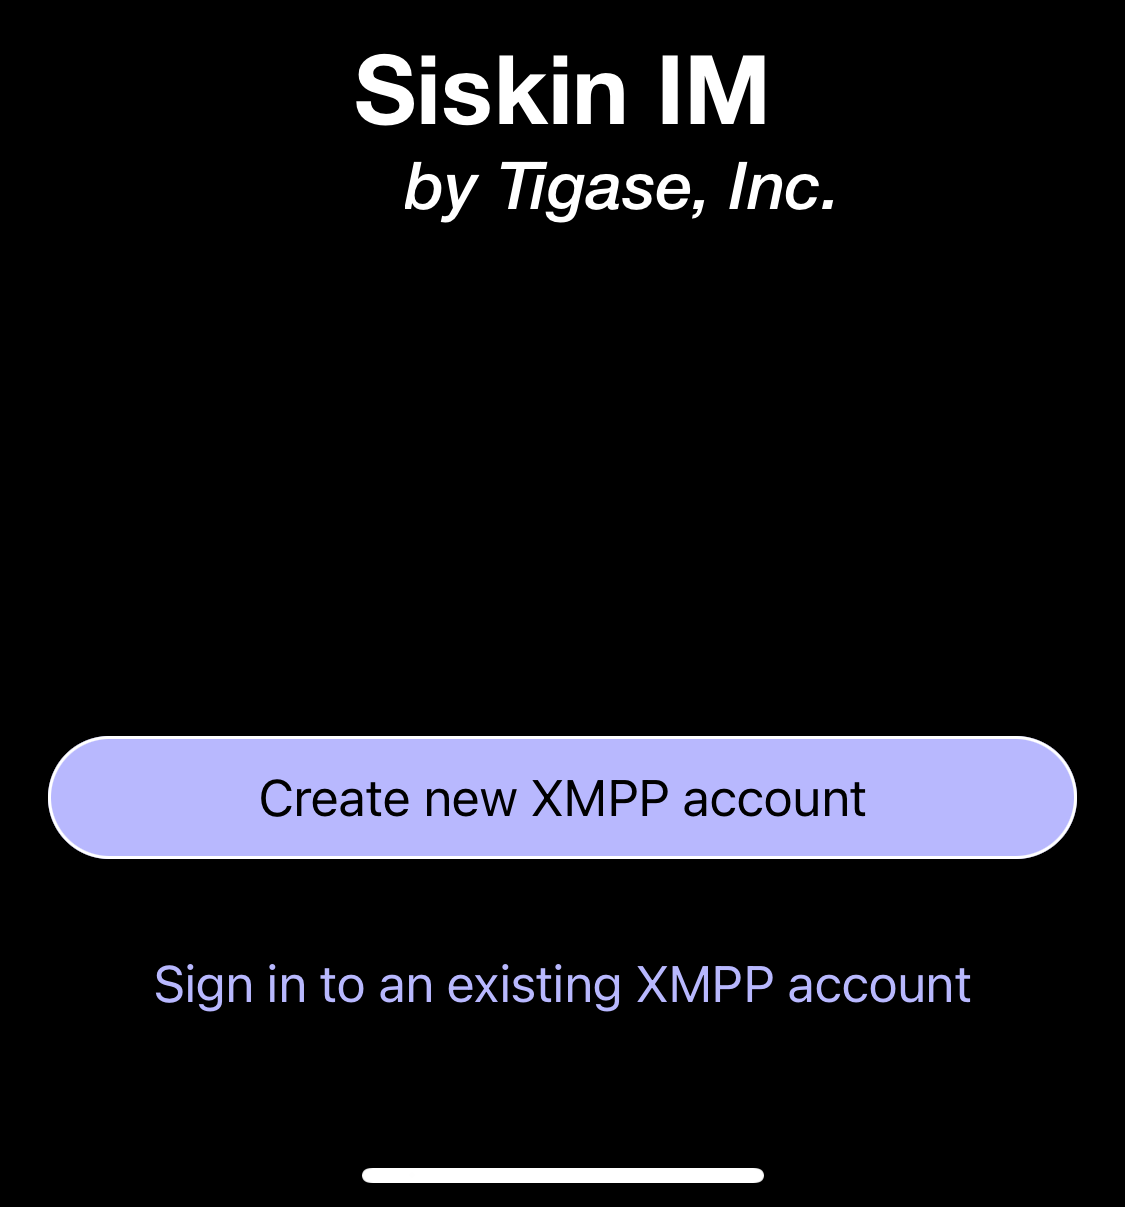 Siskin IM for iOS